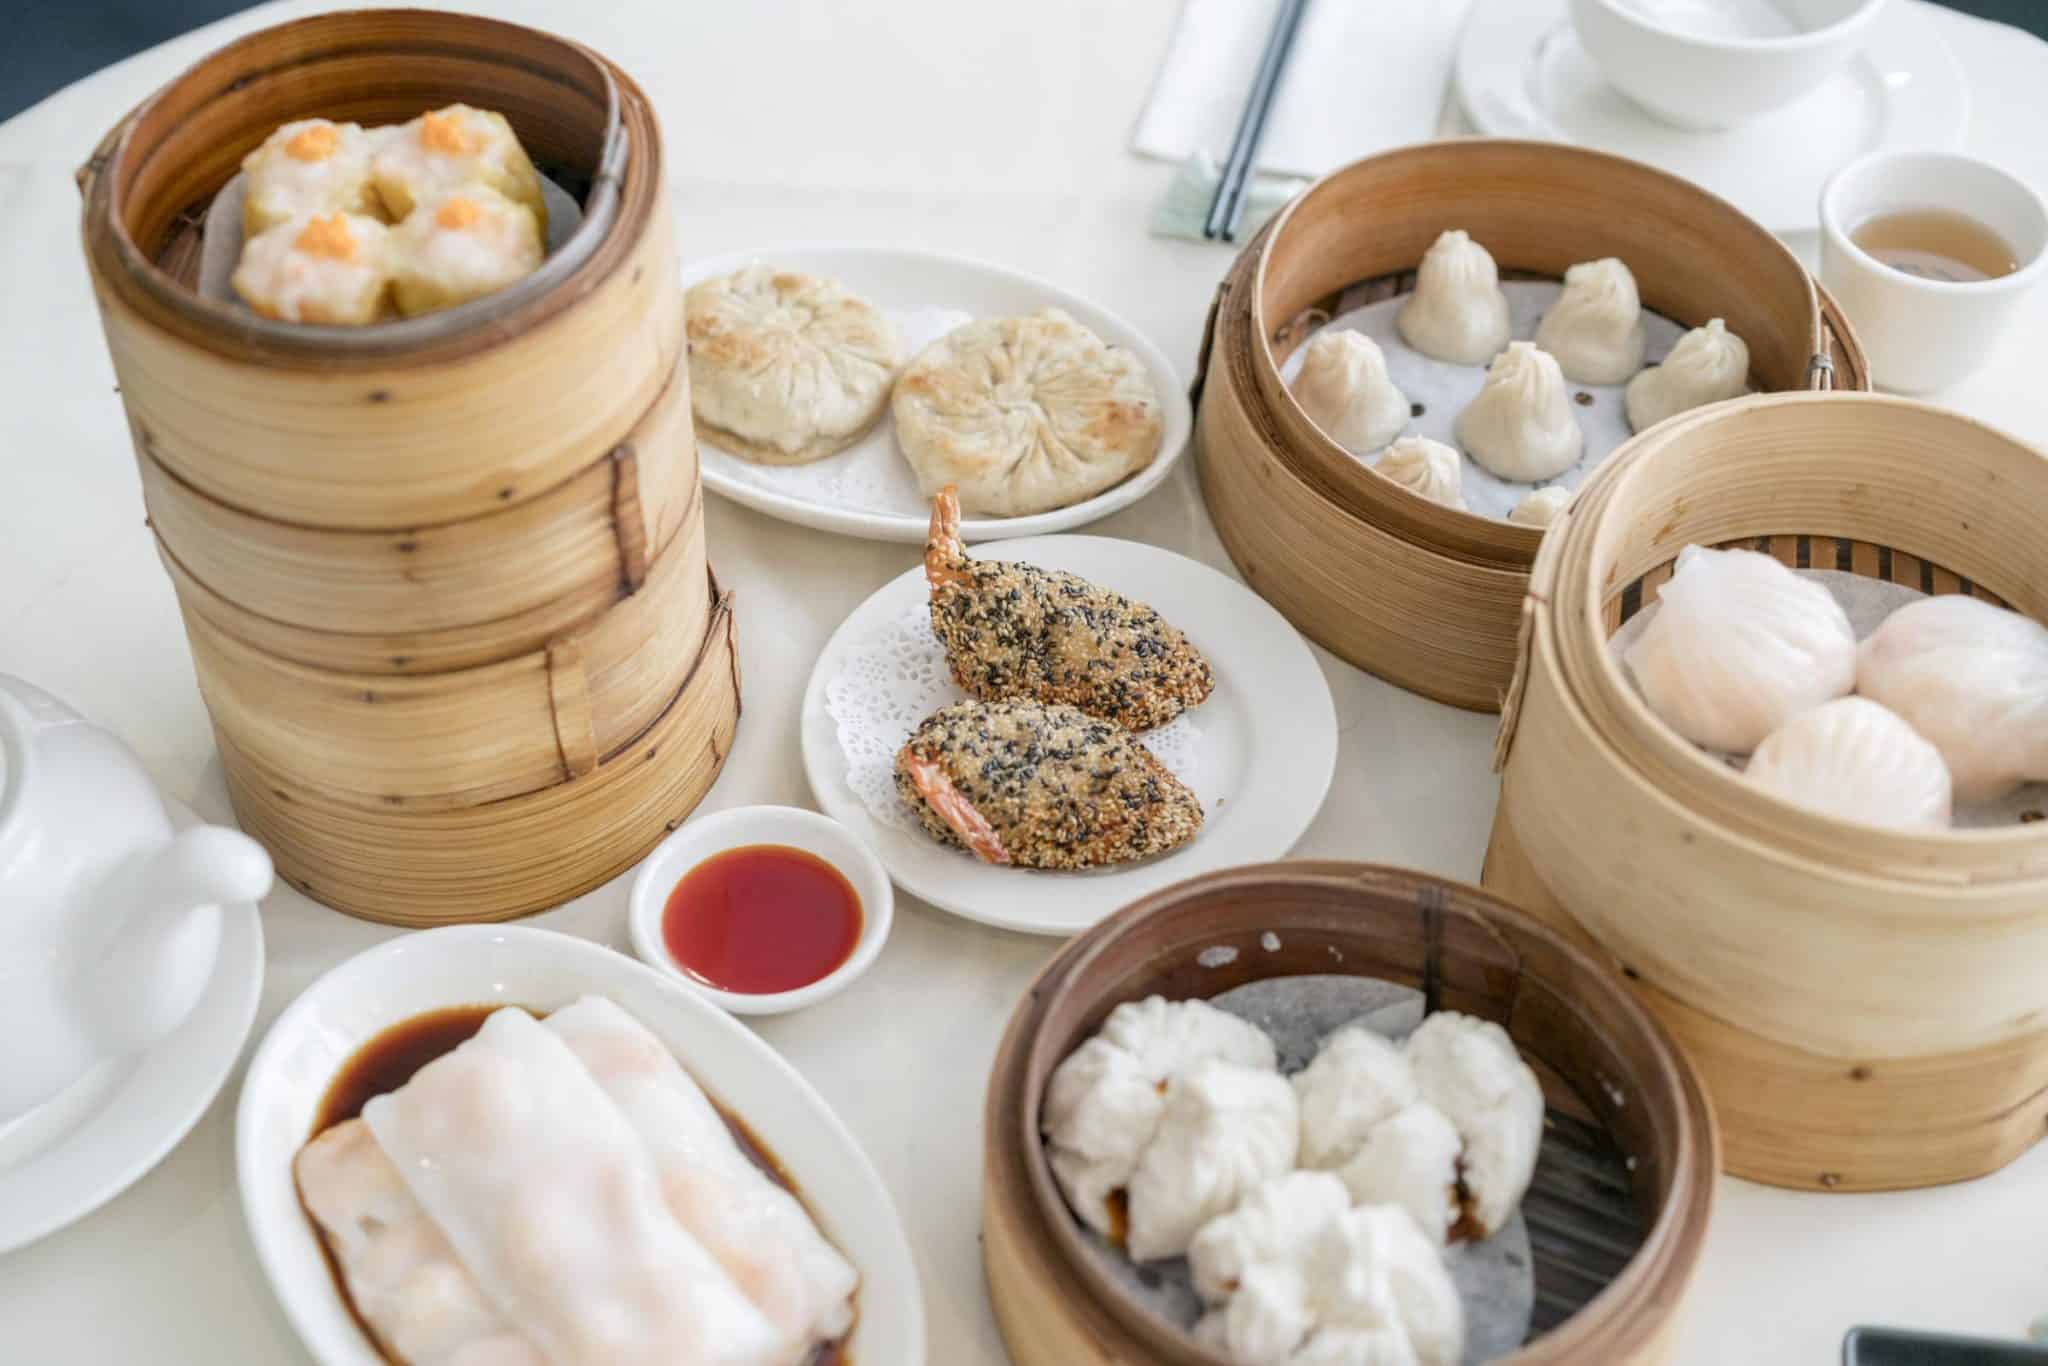 Dumplings' Legend Eat Out To Help Out